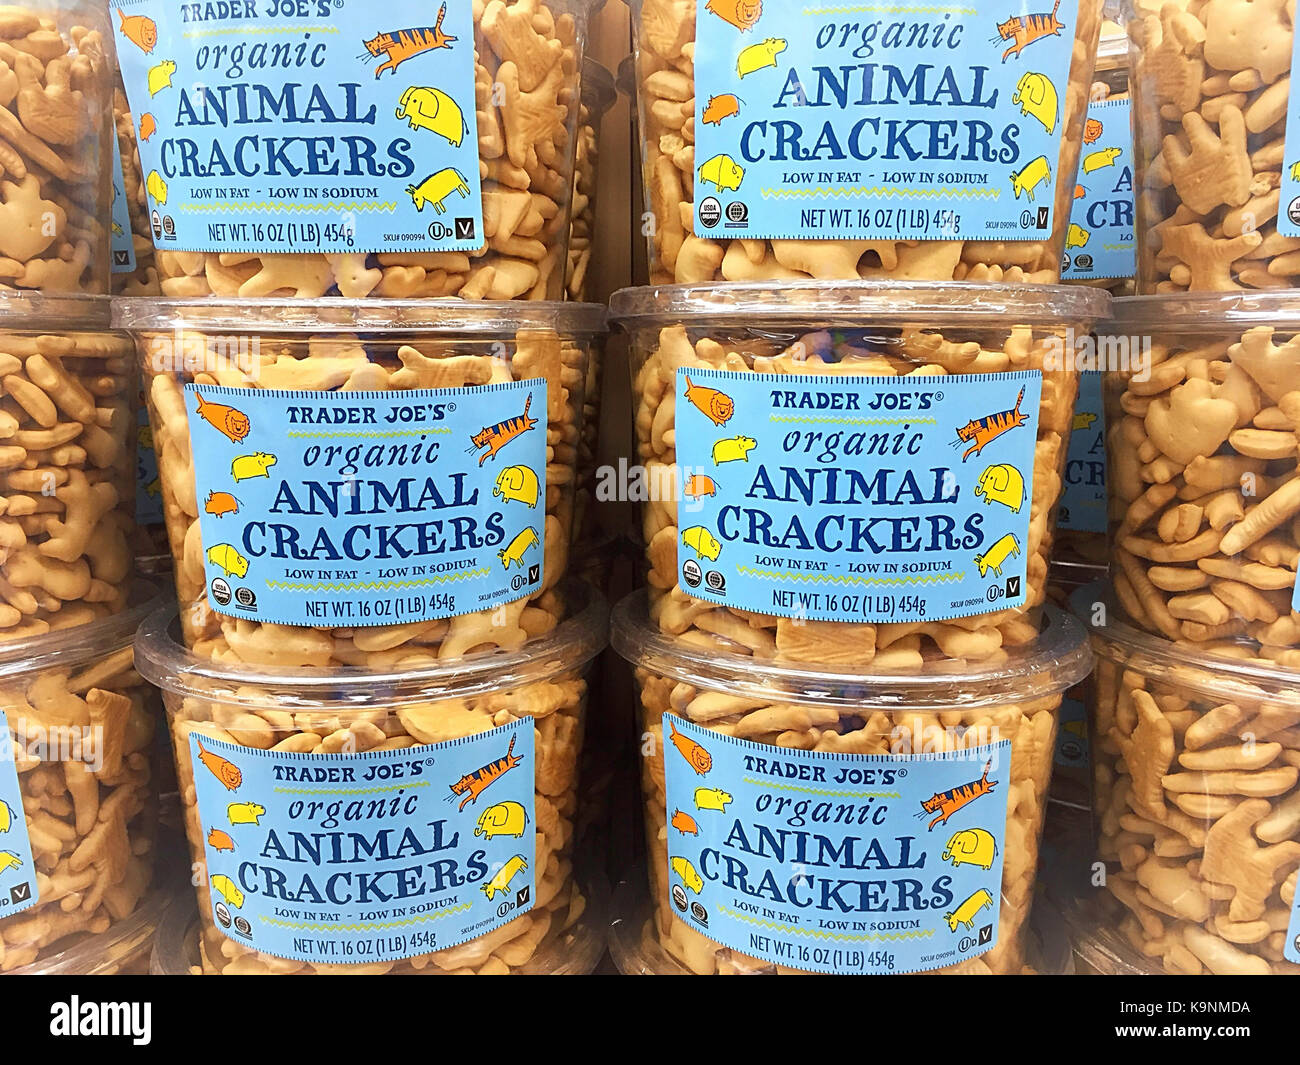 Trader Joe's Organic Animal Crackers, NYC, USA Stock Photo